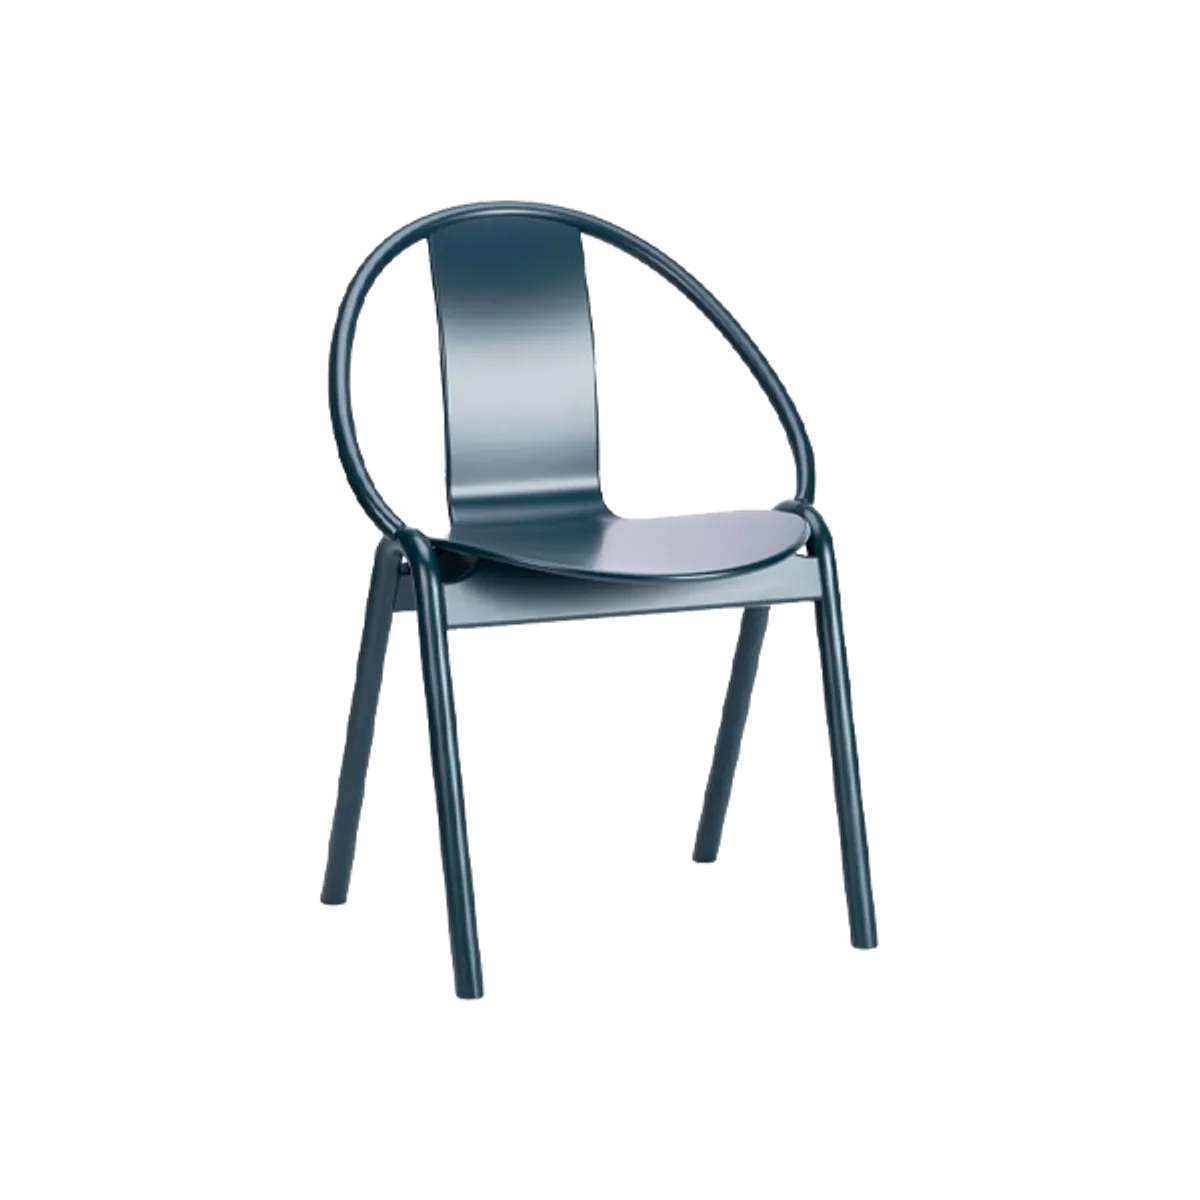 Murray chair